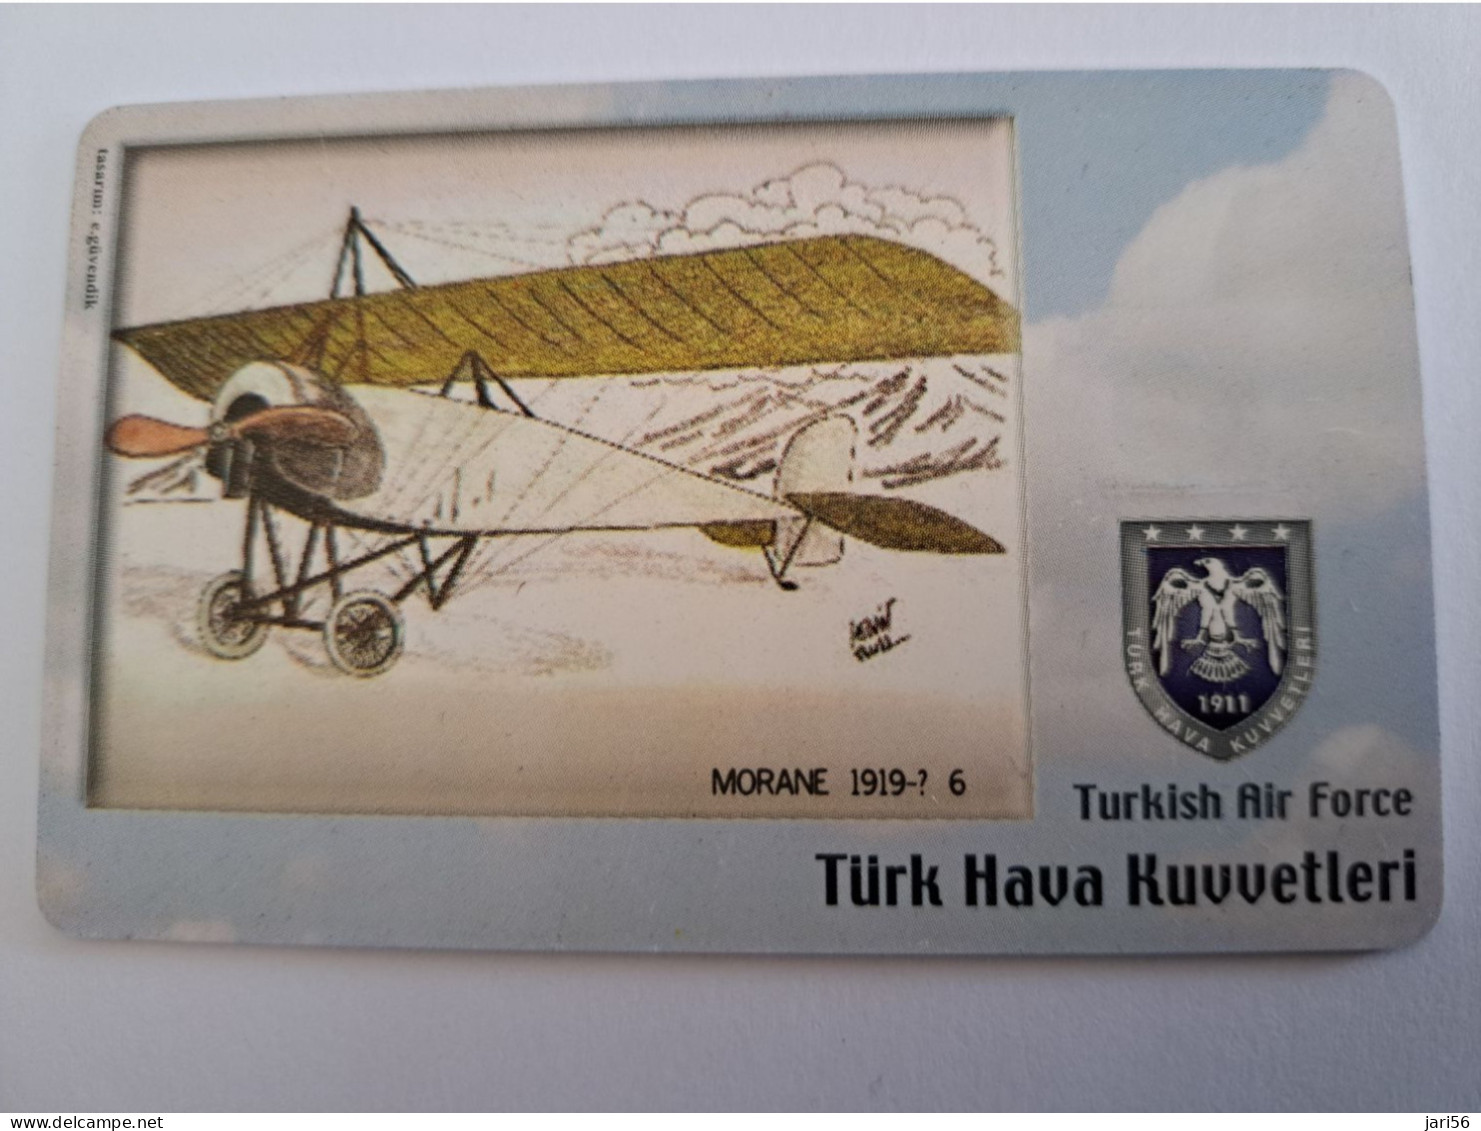 TURKIJE / 50 UNITS/ CHIPCARD/ TURKISH AIR FORCE  / DIFFERENT PLANES /        Fine Used Card  **15378** - Turkey